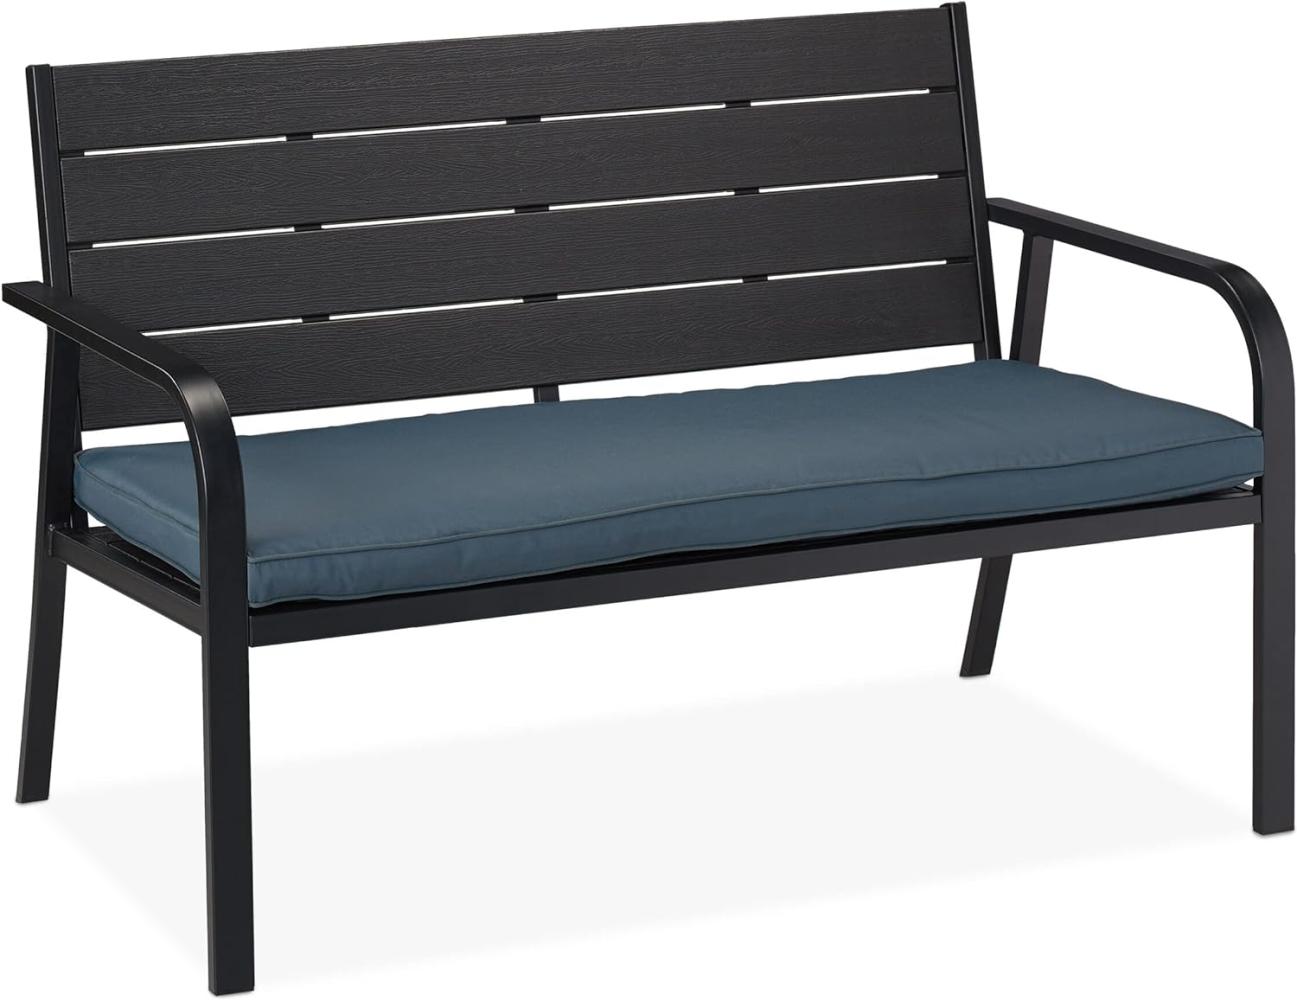 Relaxdays Gartenbank mit Sitzkissen, Holzoptik, HBT: 78 x 118 x 66 cm, 2 Sitzer, stabile Balkonbank, schwarz/anthrazit Bild 1